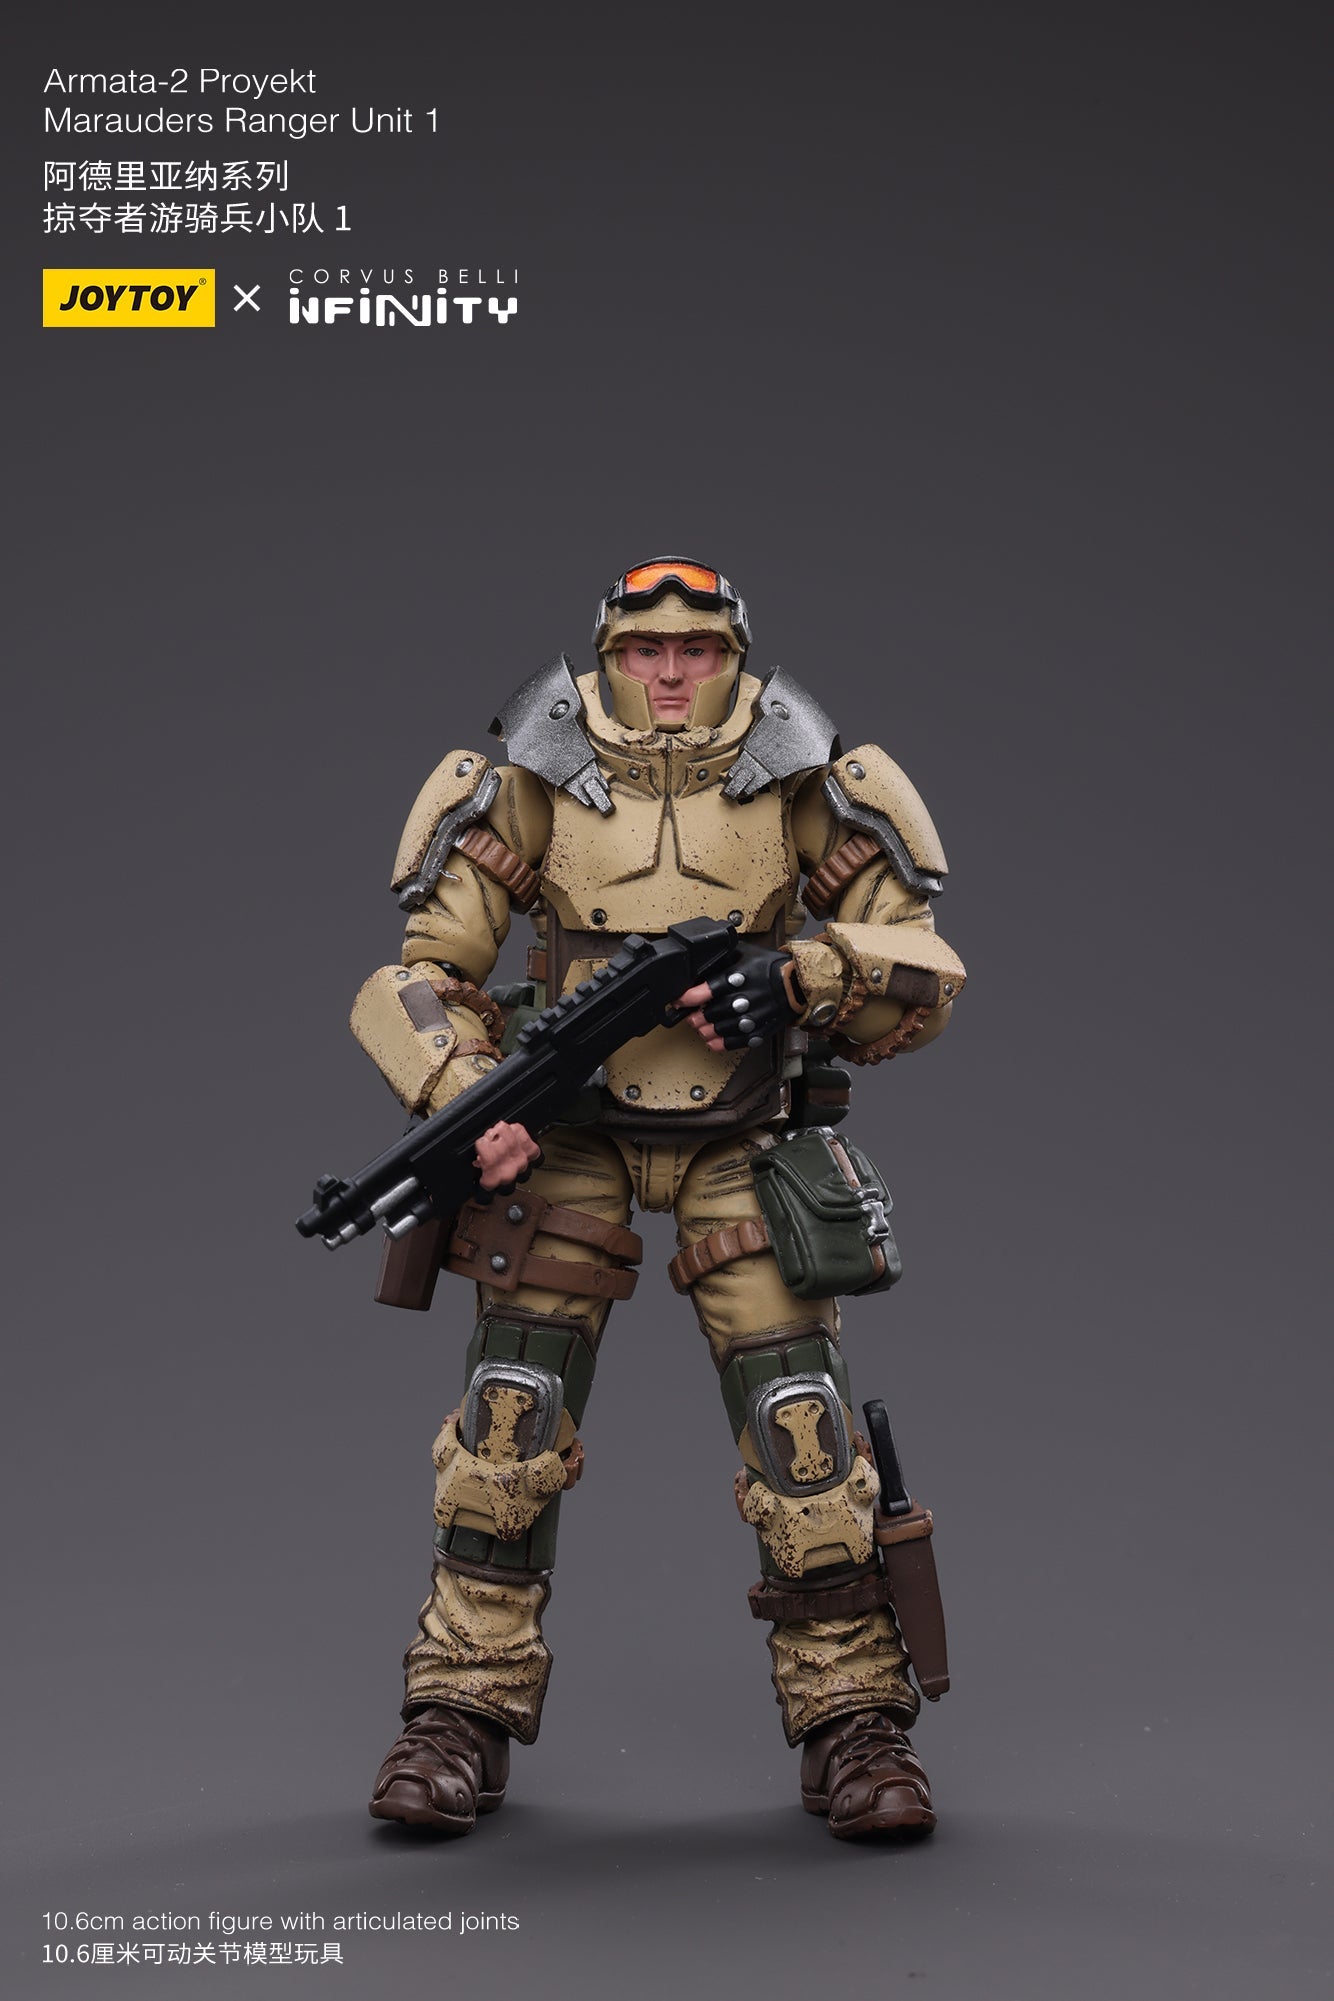 Armata-2 Proyekt Marauders Ranger Unit 1- Action Figure By JOYTOY